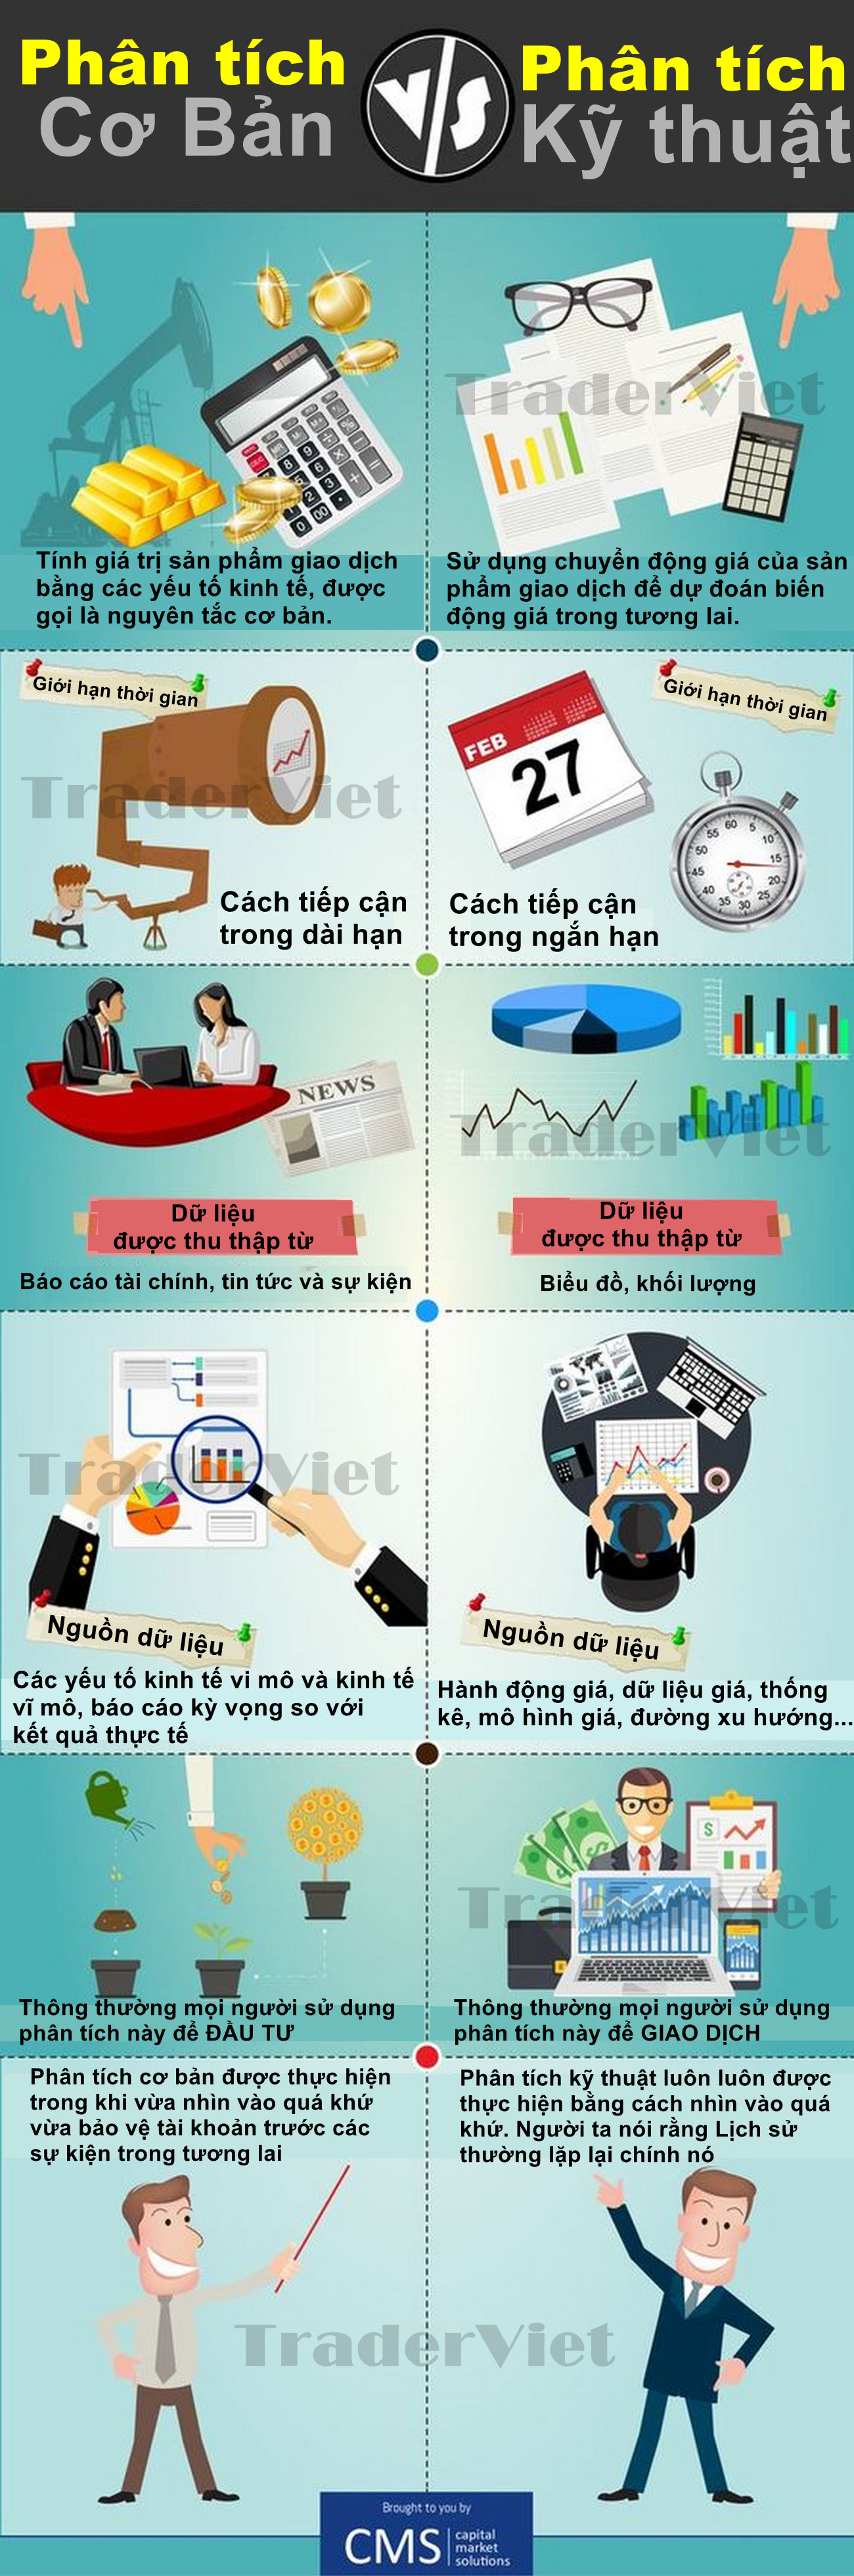 Infographic-Su-khac-nhau-giua-Phan-tich-co-ban-va-Phan-tich-ky-thuat-TraderViet1.jpg